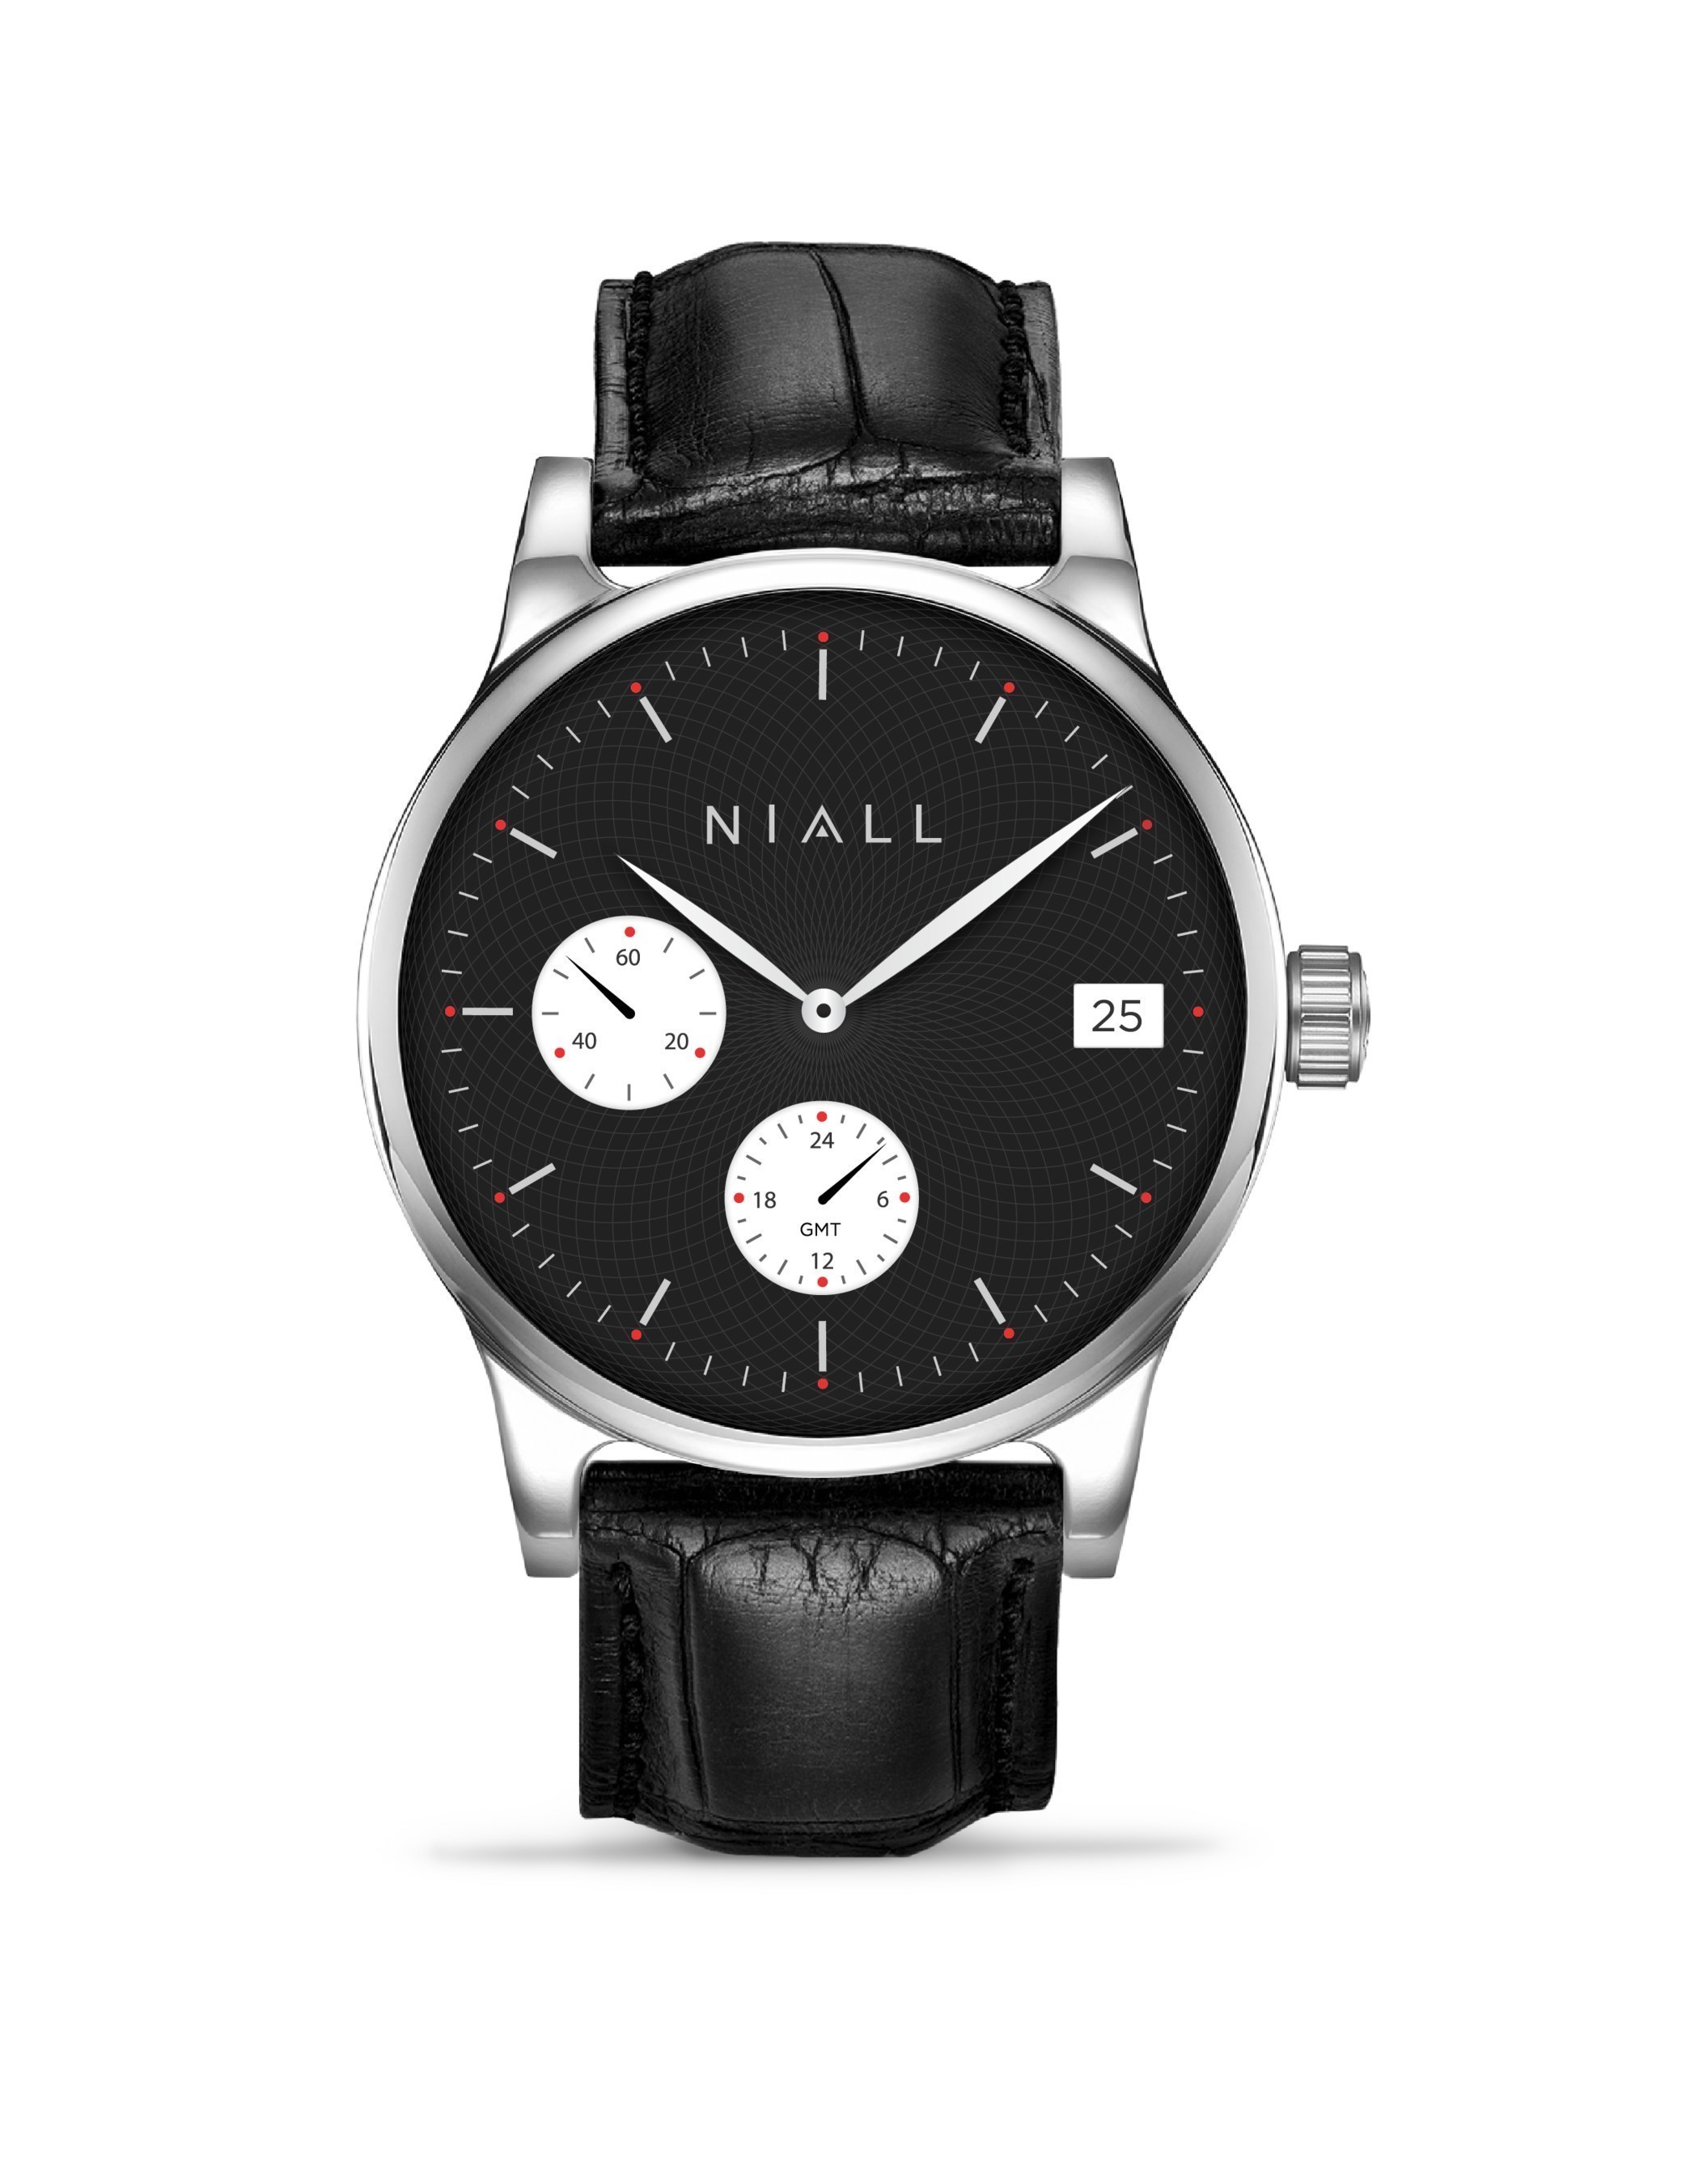 Niall's new Black Swan watch.